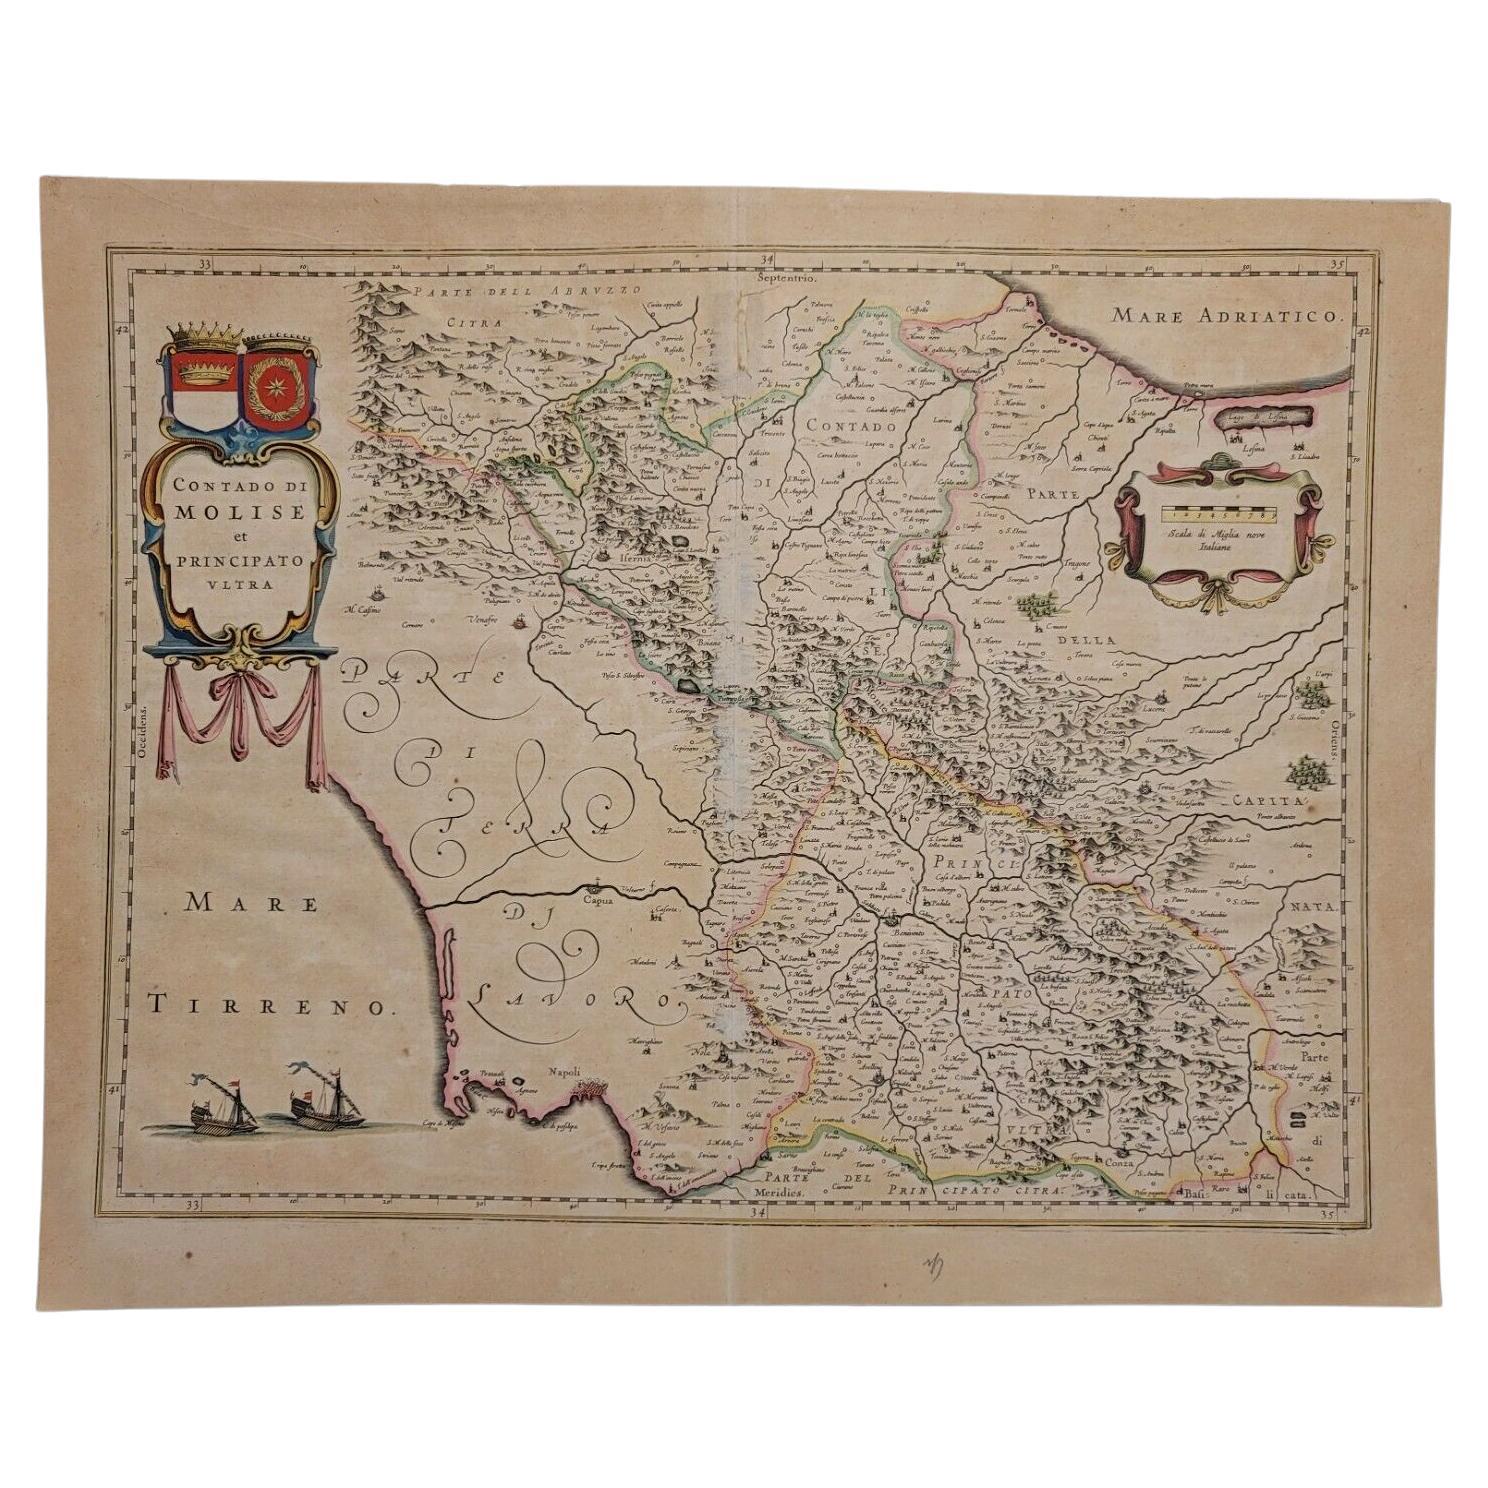 1640 Willem Blaeu Map Entitled "Contado di molise et principato vltra, " Ric.a003